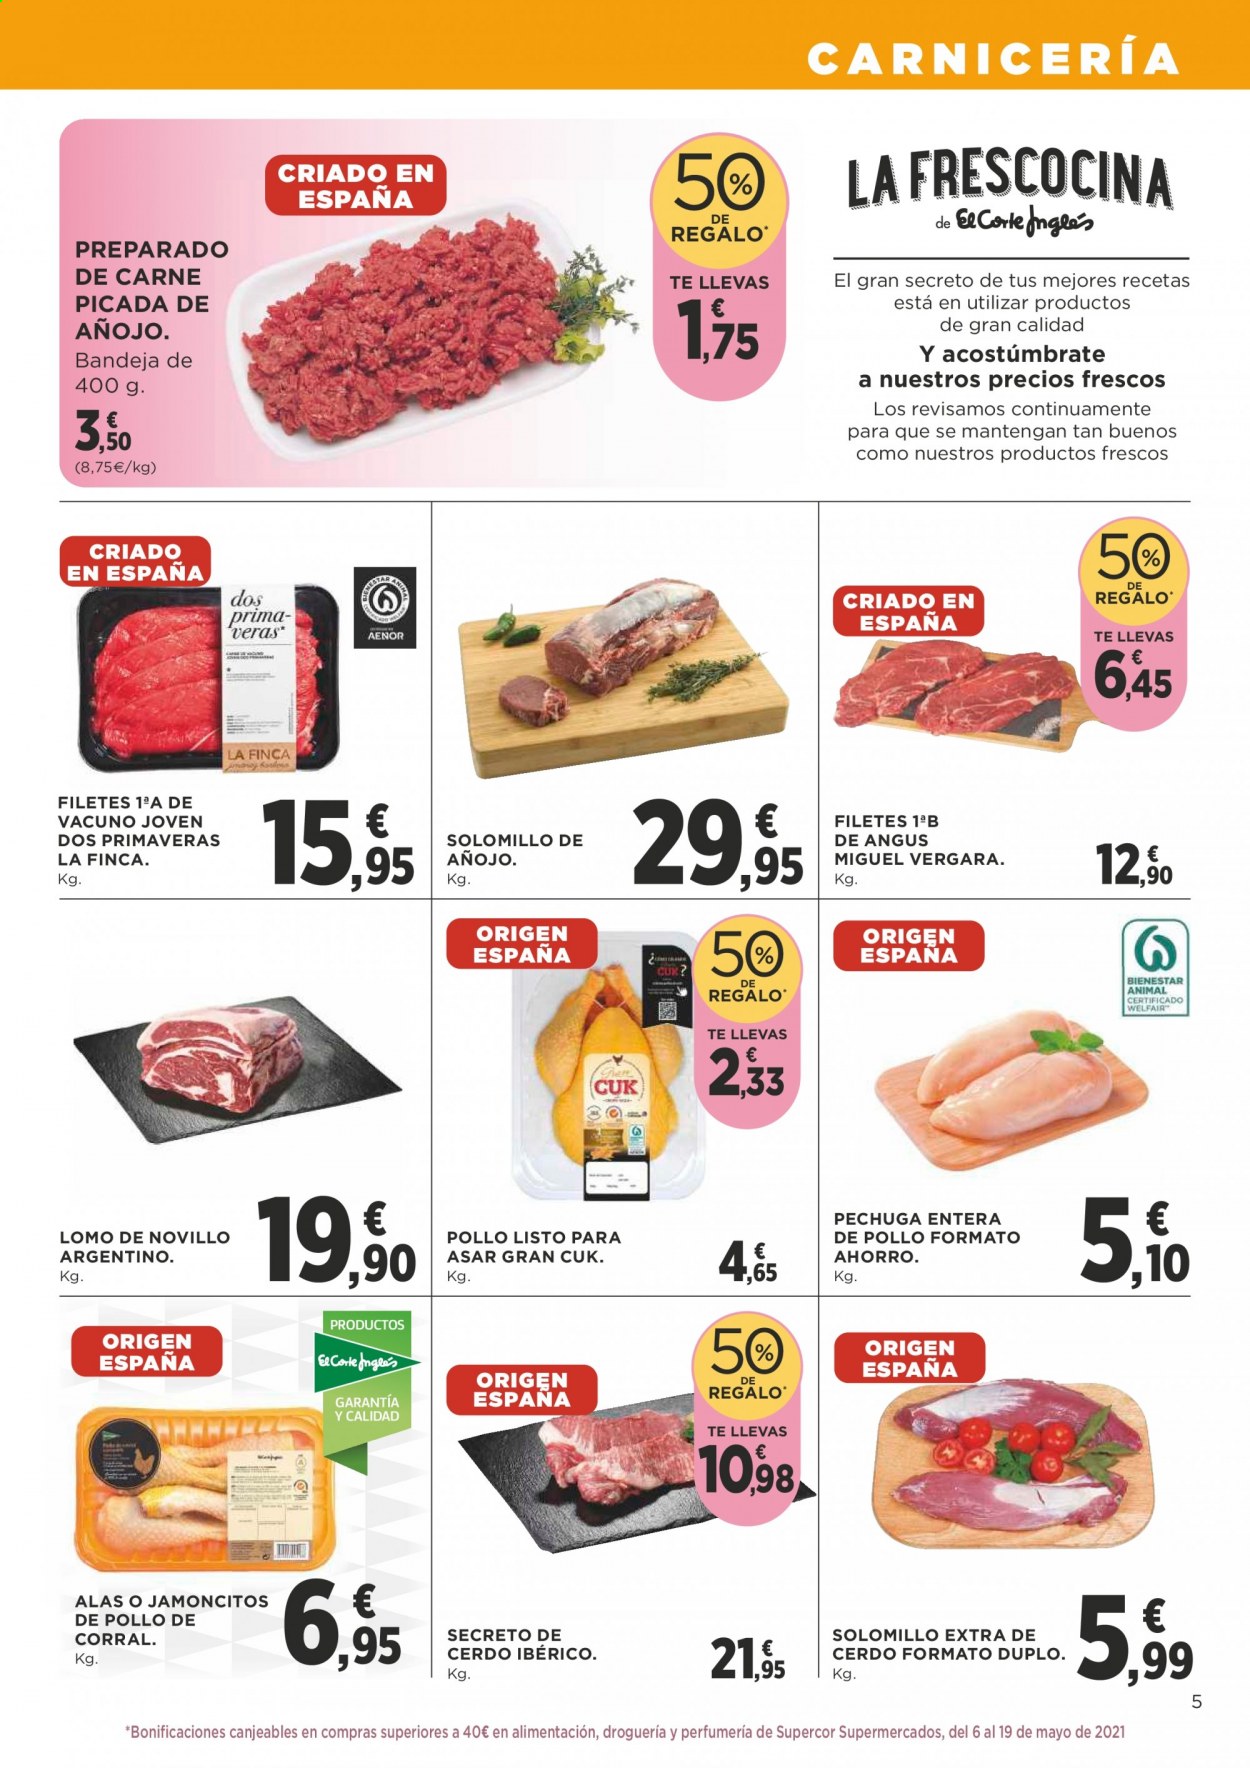 thumbnail - Folleto actual Supercor supermercados - 22/04/21 - 05/05/21 - Ventas - lomo, solomillo, cerdo ibérico, secreto de cerdo, angus, carne picada. Página 5.